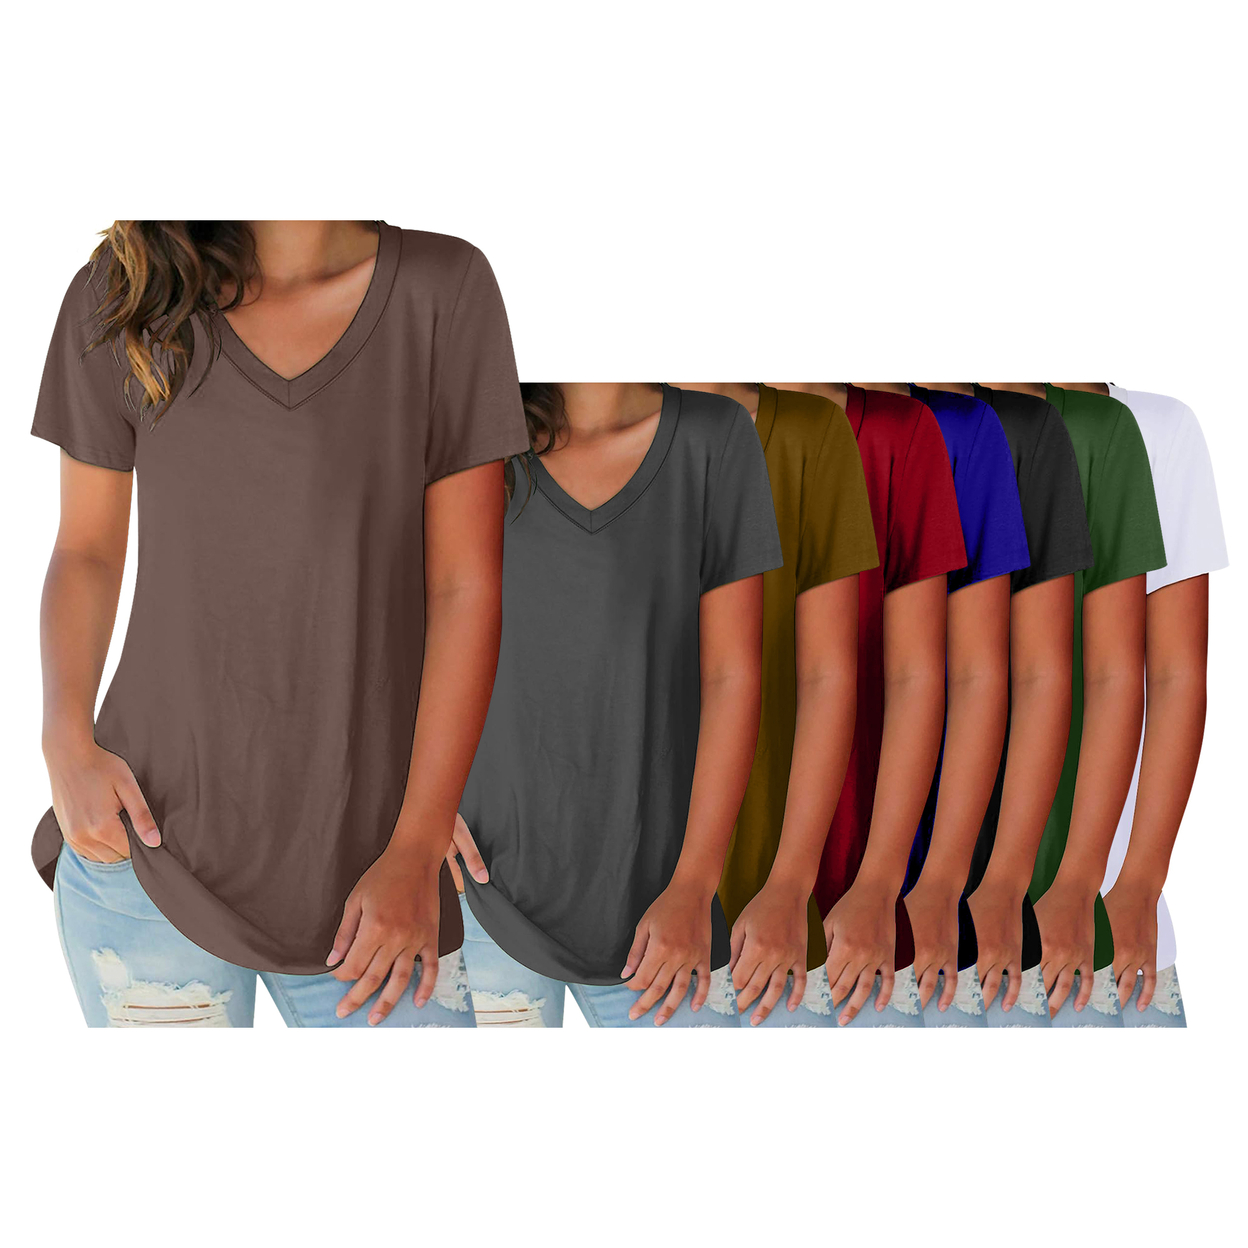 3-Pack: Women's Ultra Soft Smooth Cotton Blend Basic V-Neck Short Sleeve Shirts - Black, Grey, Green, Small